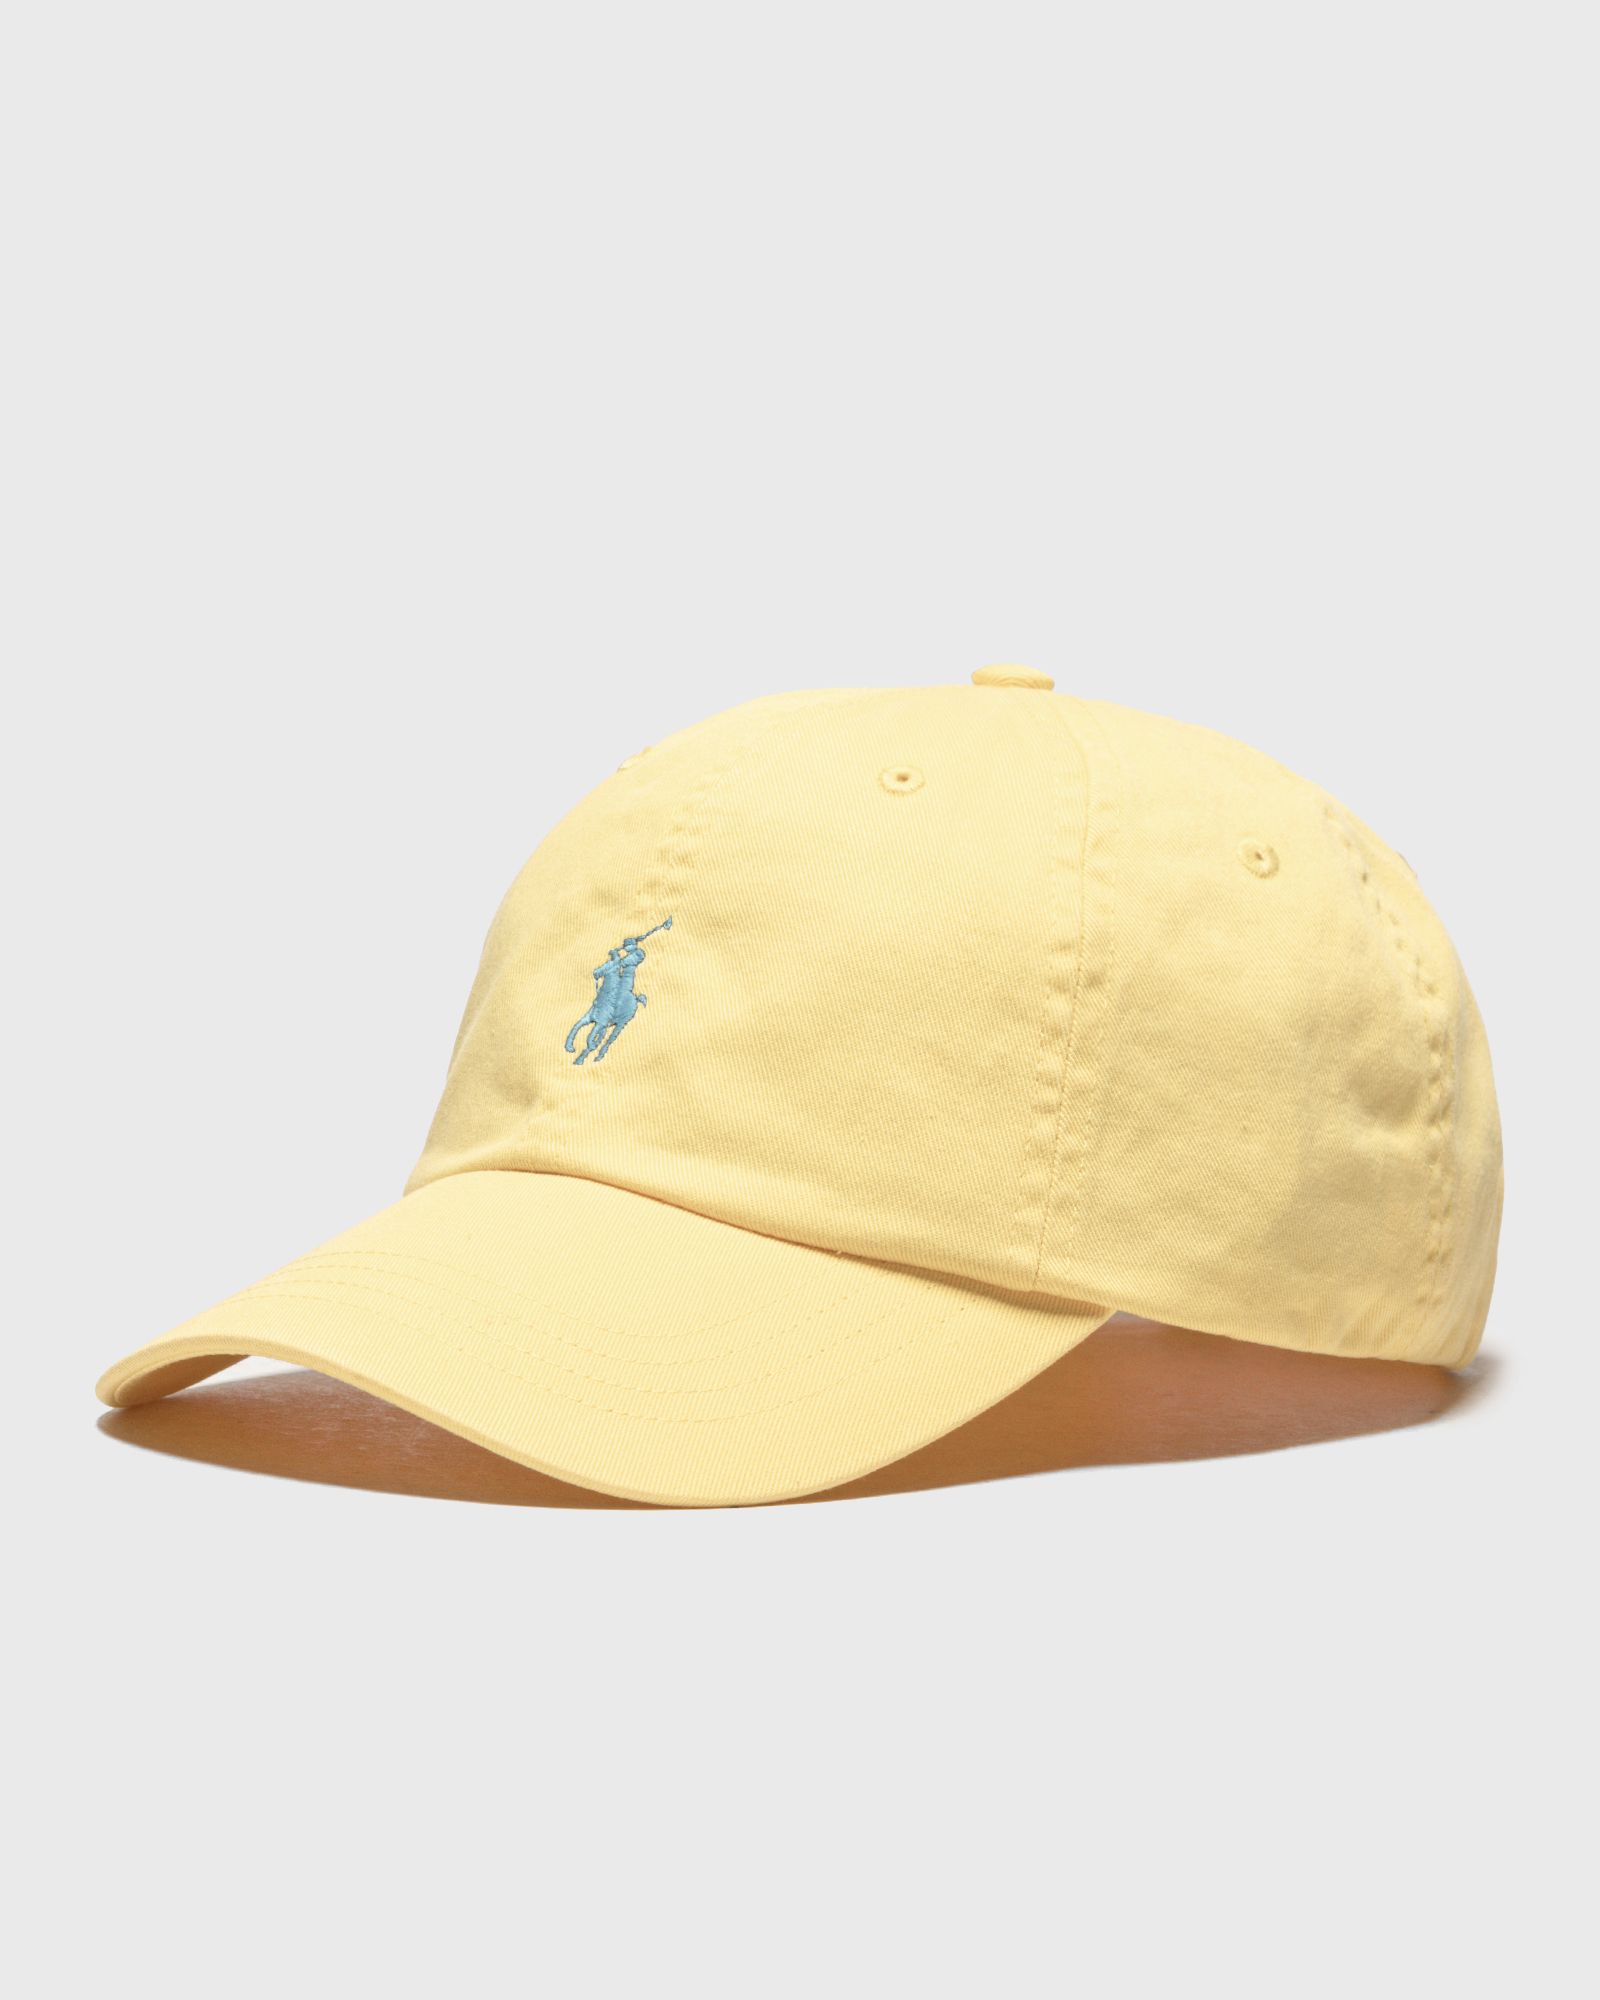 Polo Ralph Lauren - cls sport cap men caps yellow in größe:one size